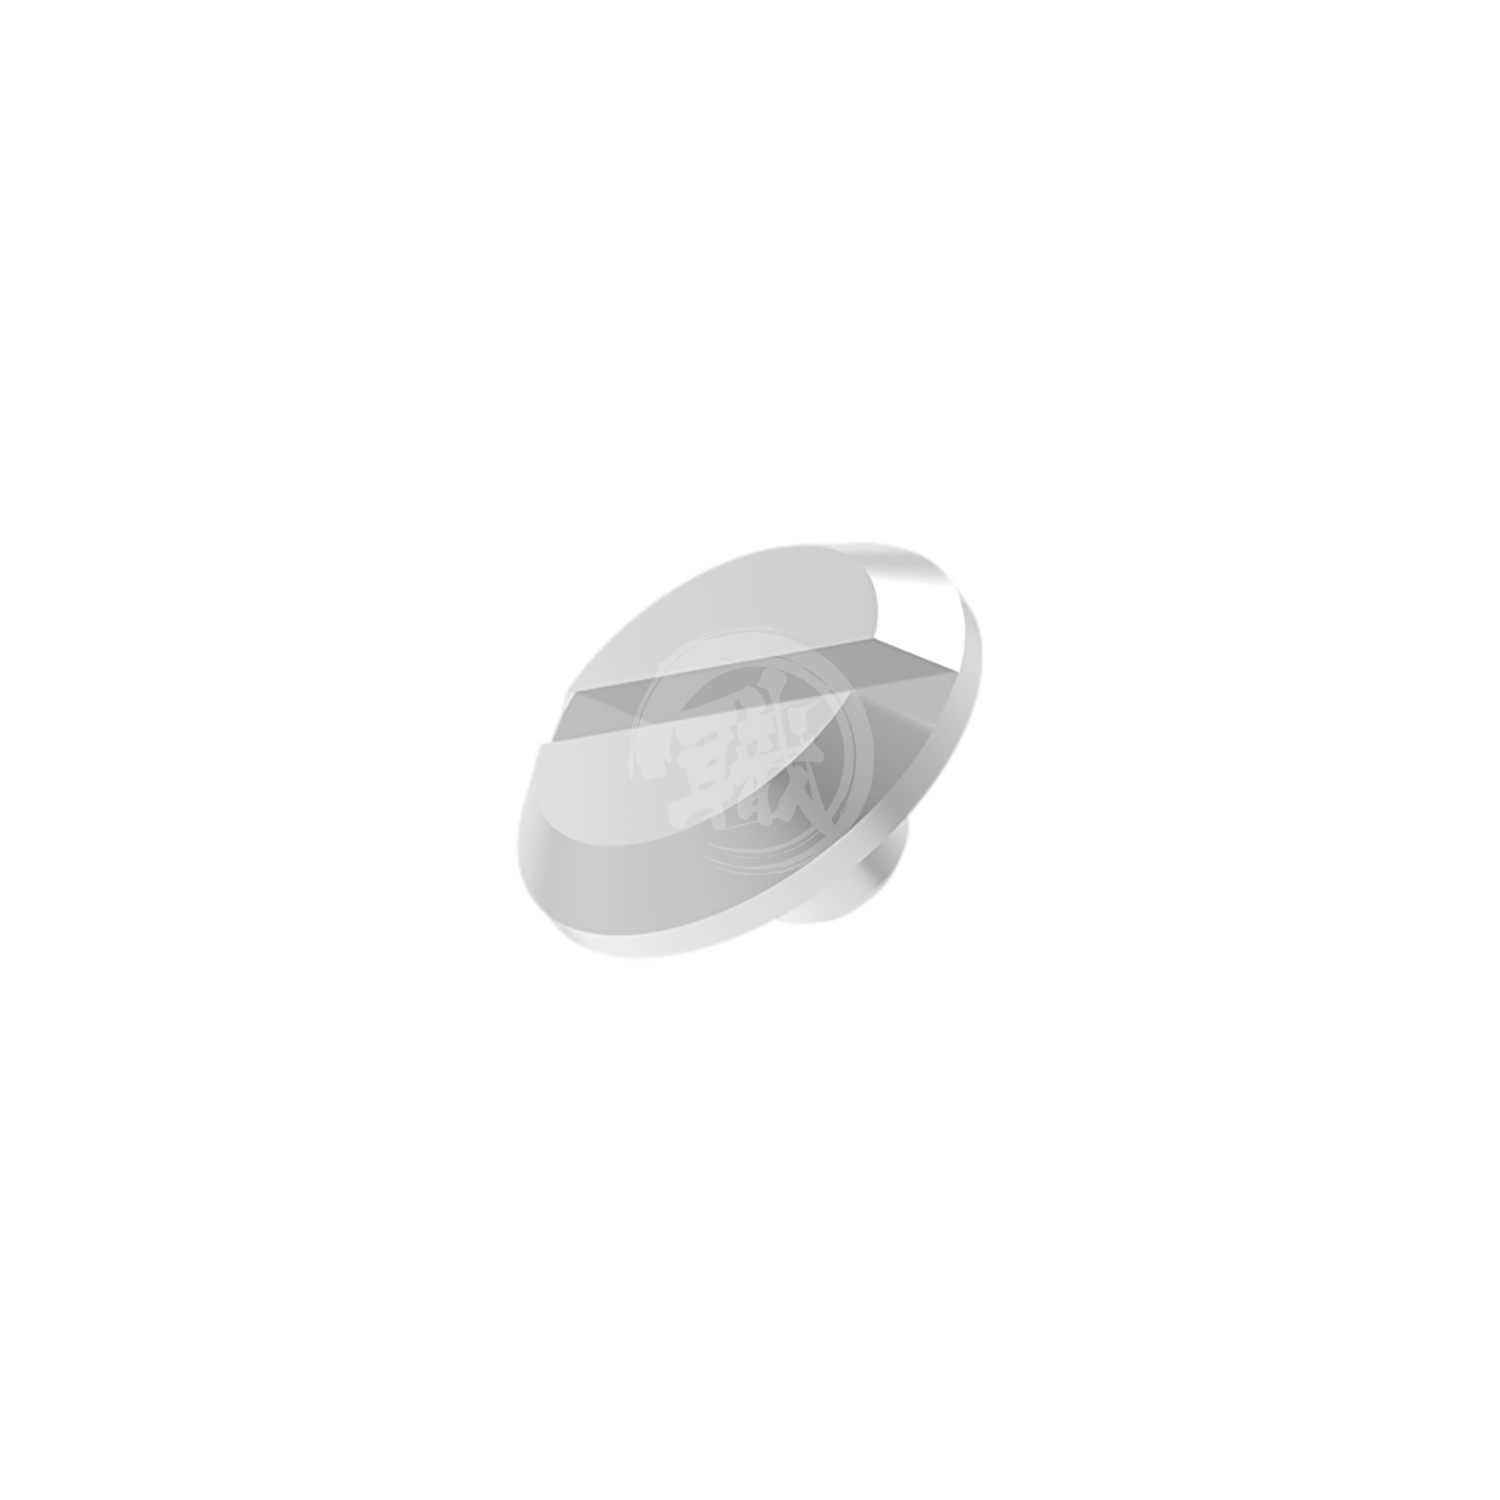 Minus Mold [3.0mm] - ShokuninGunpla